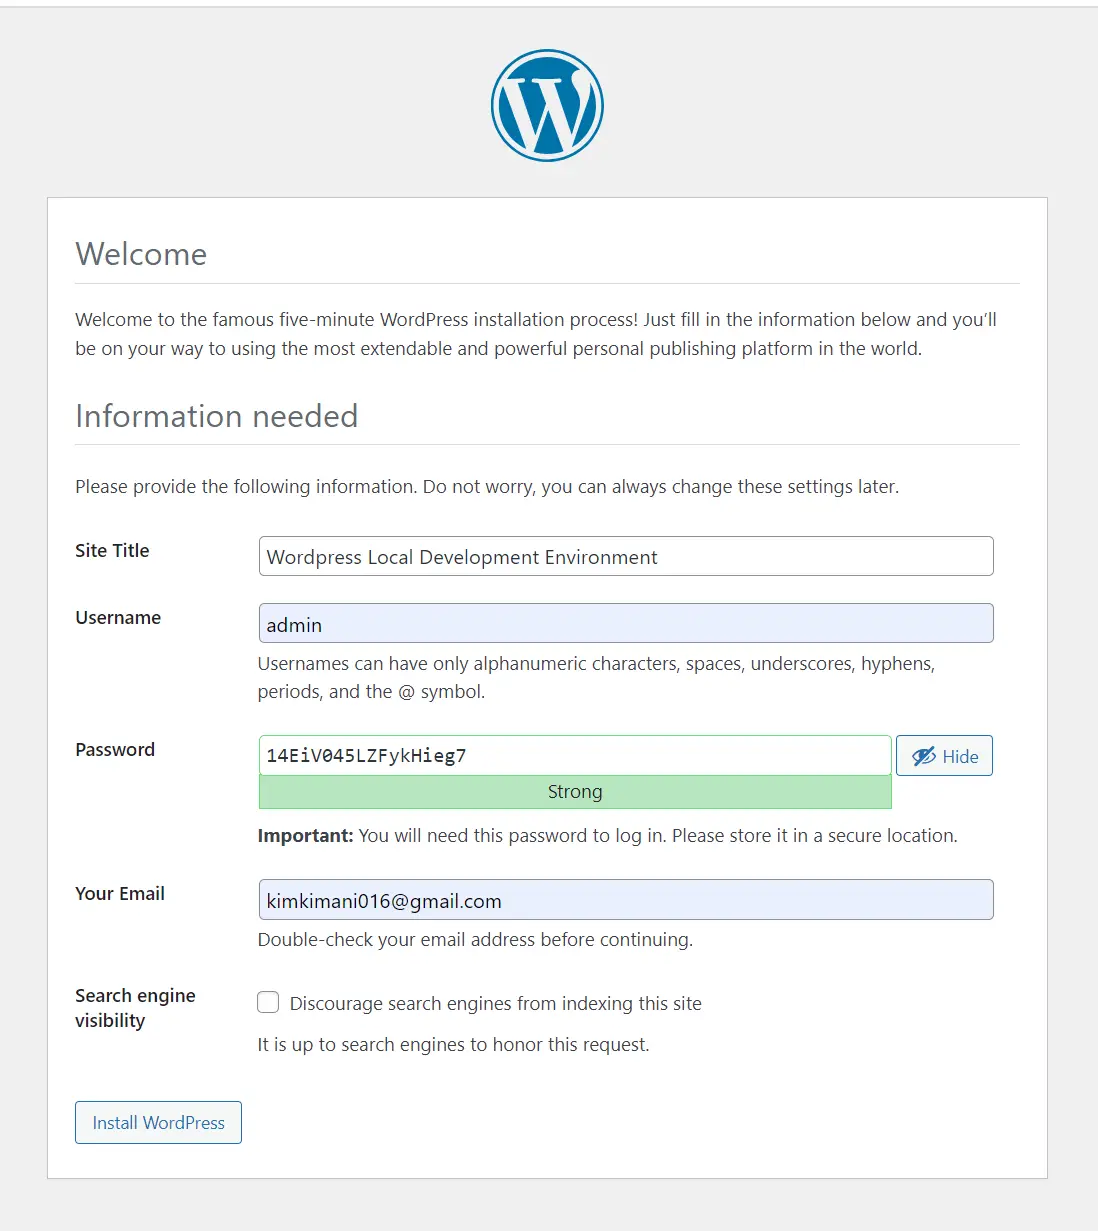 WordPress Local Development Environment with Docker Compose